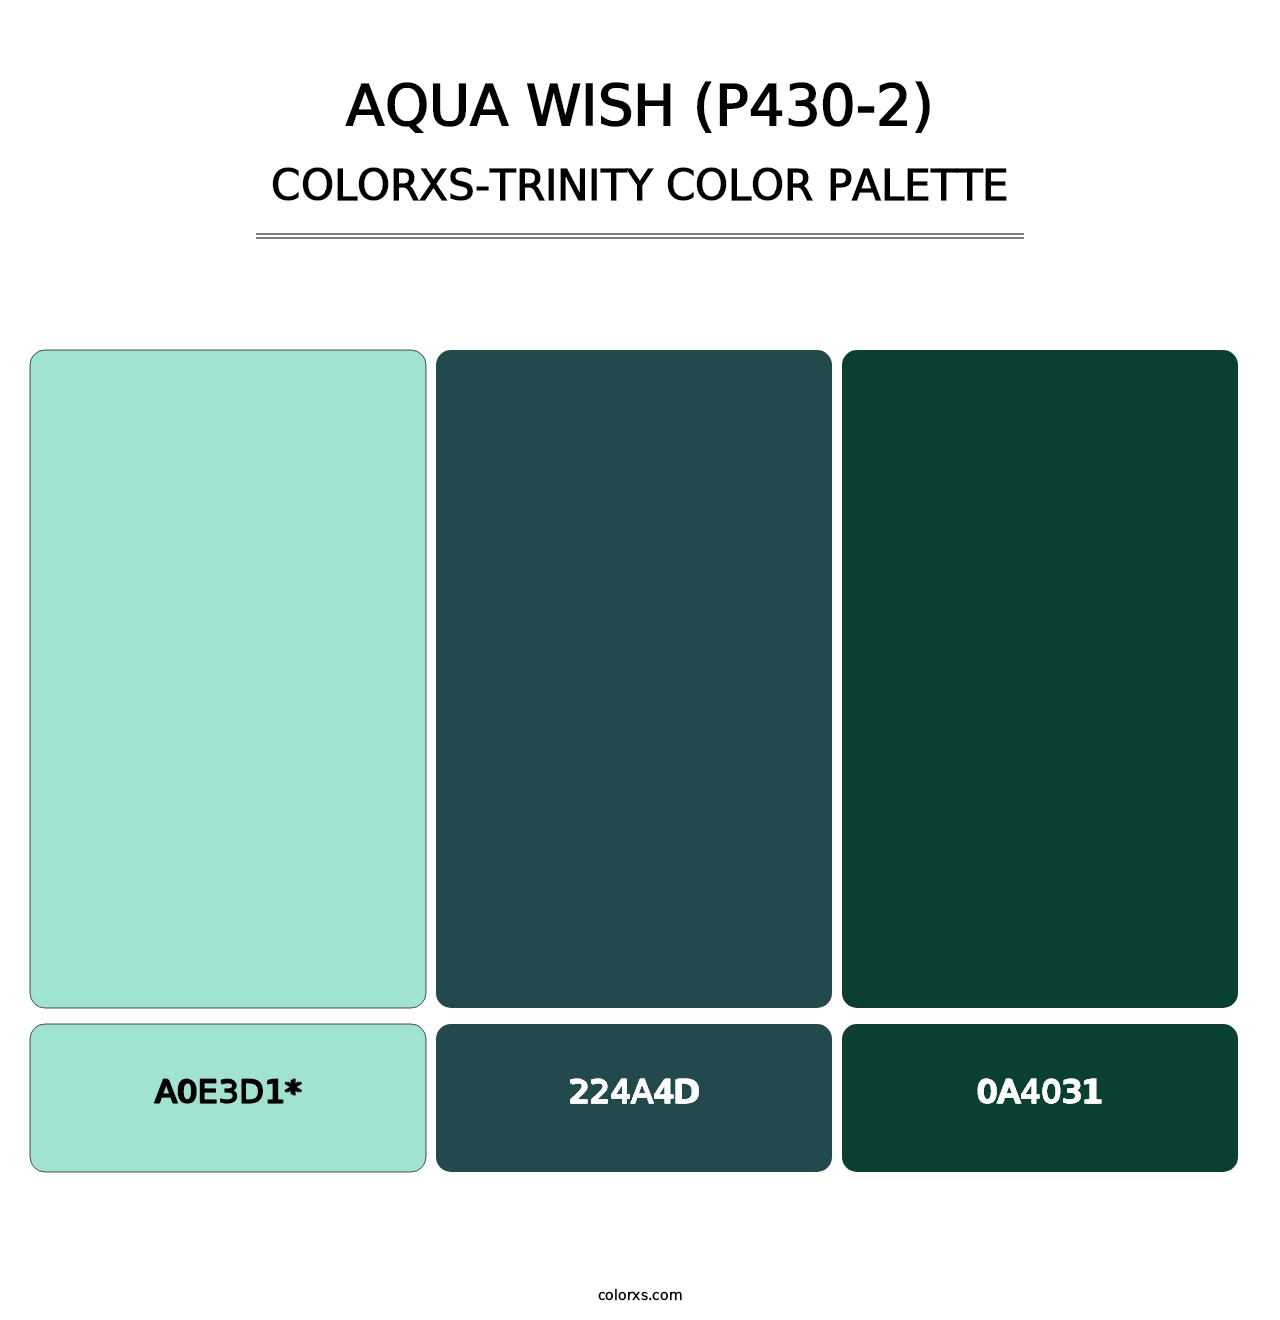 Aqua Wish (P430-2) - Colorxs Trinity Palette